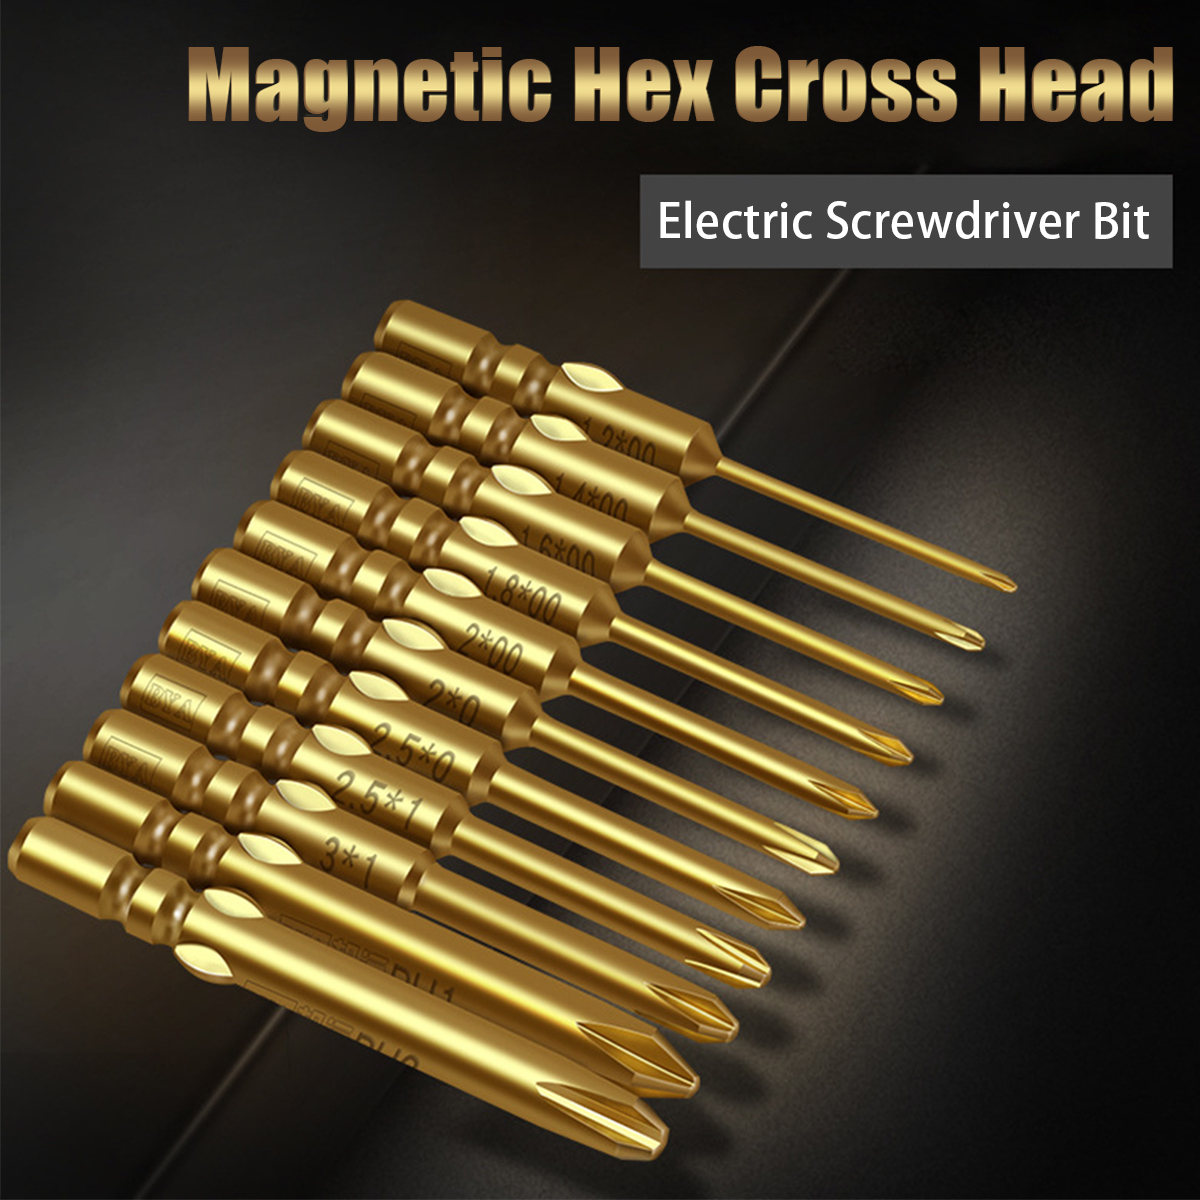 10Pcs-40mm-Magnetic-Screwdriver-Bits-Hex-Cross-Head-PH0-PH1-PH2-Bit-For-Electric-Screwdriver-1556070-1